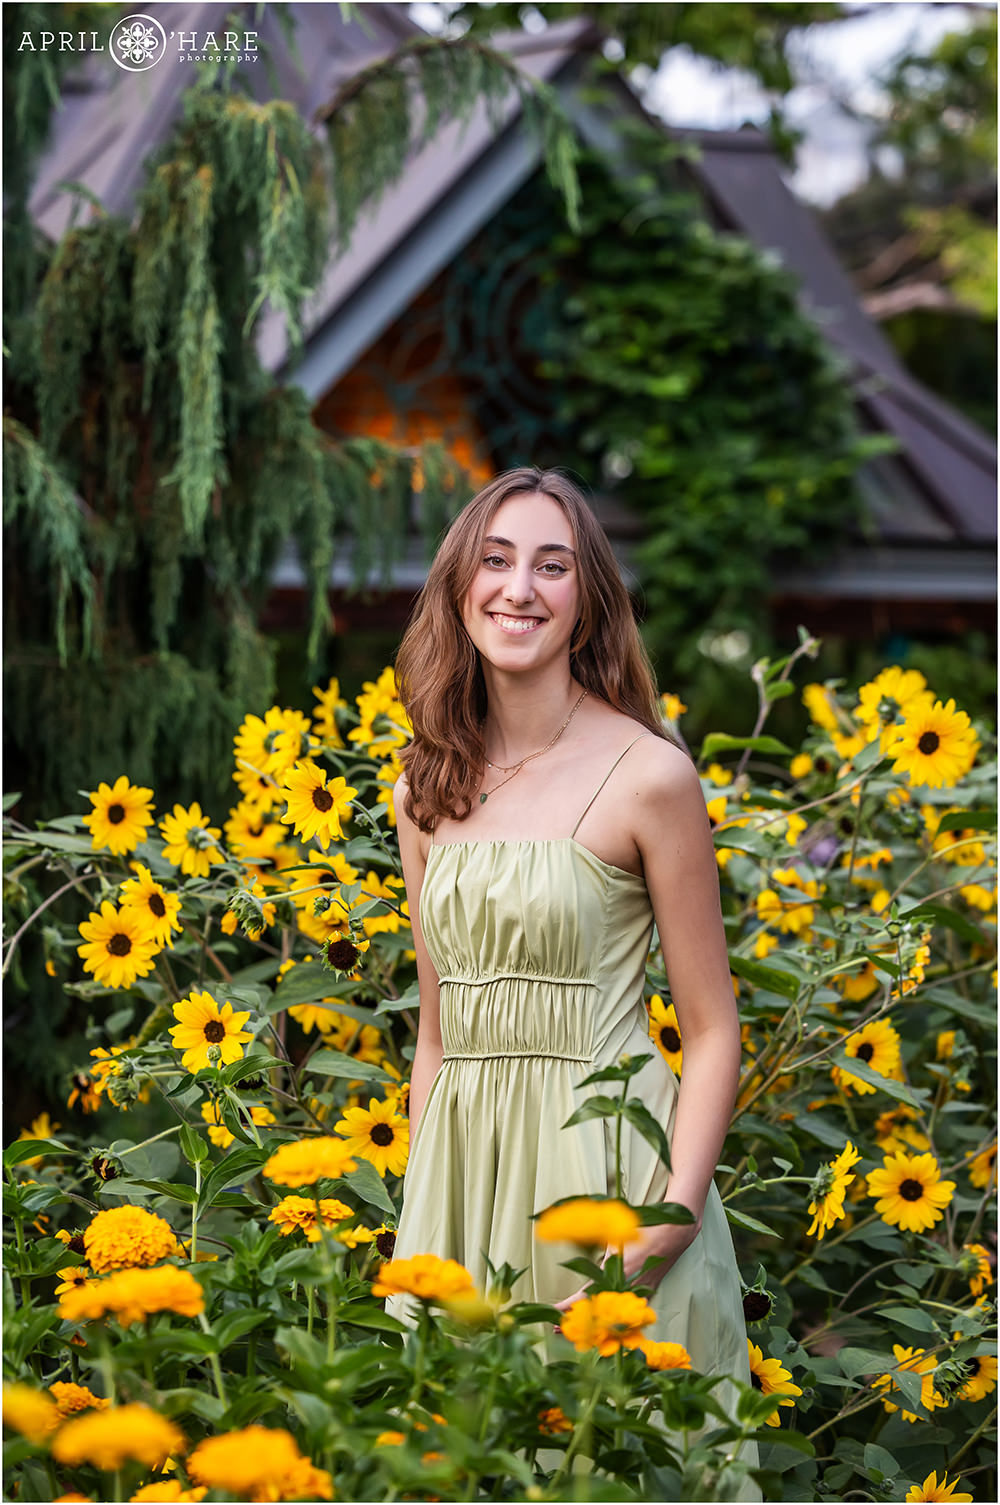 High school senior photo in the yellow sunflowers of Denver Botanic Gardens in Colorado